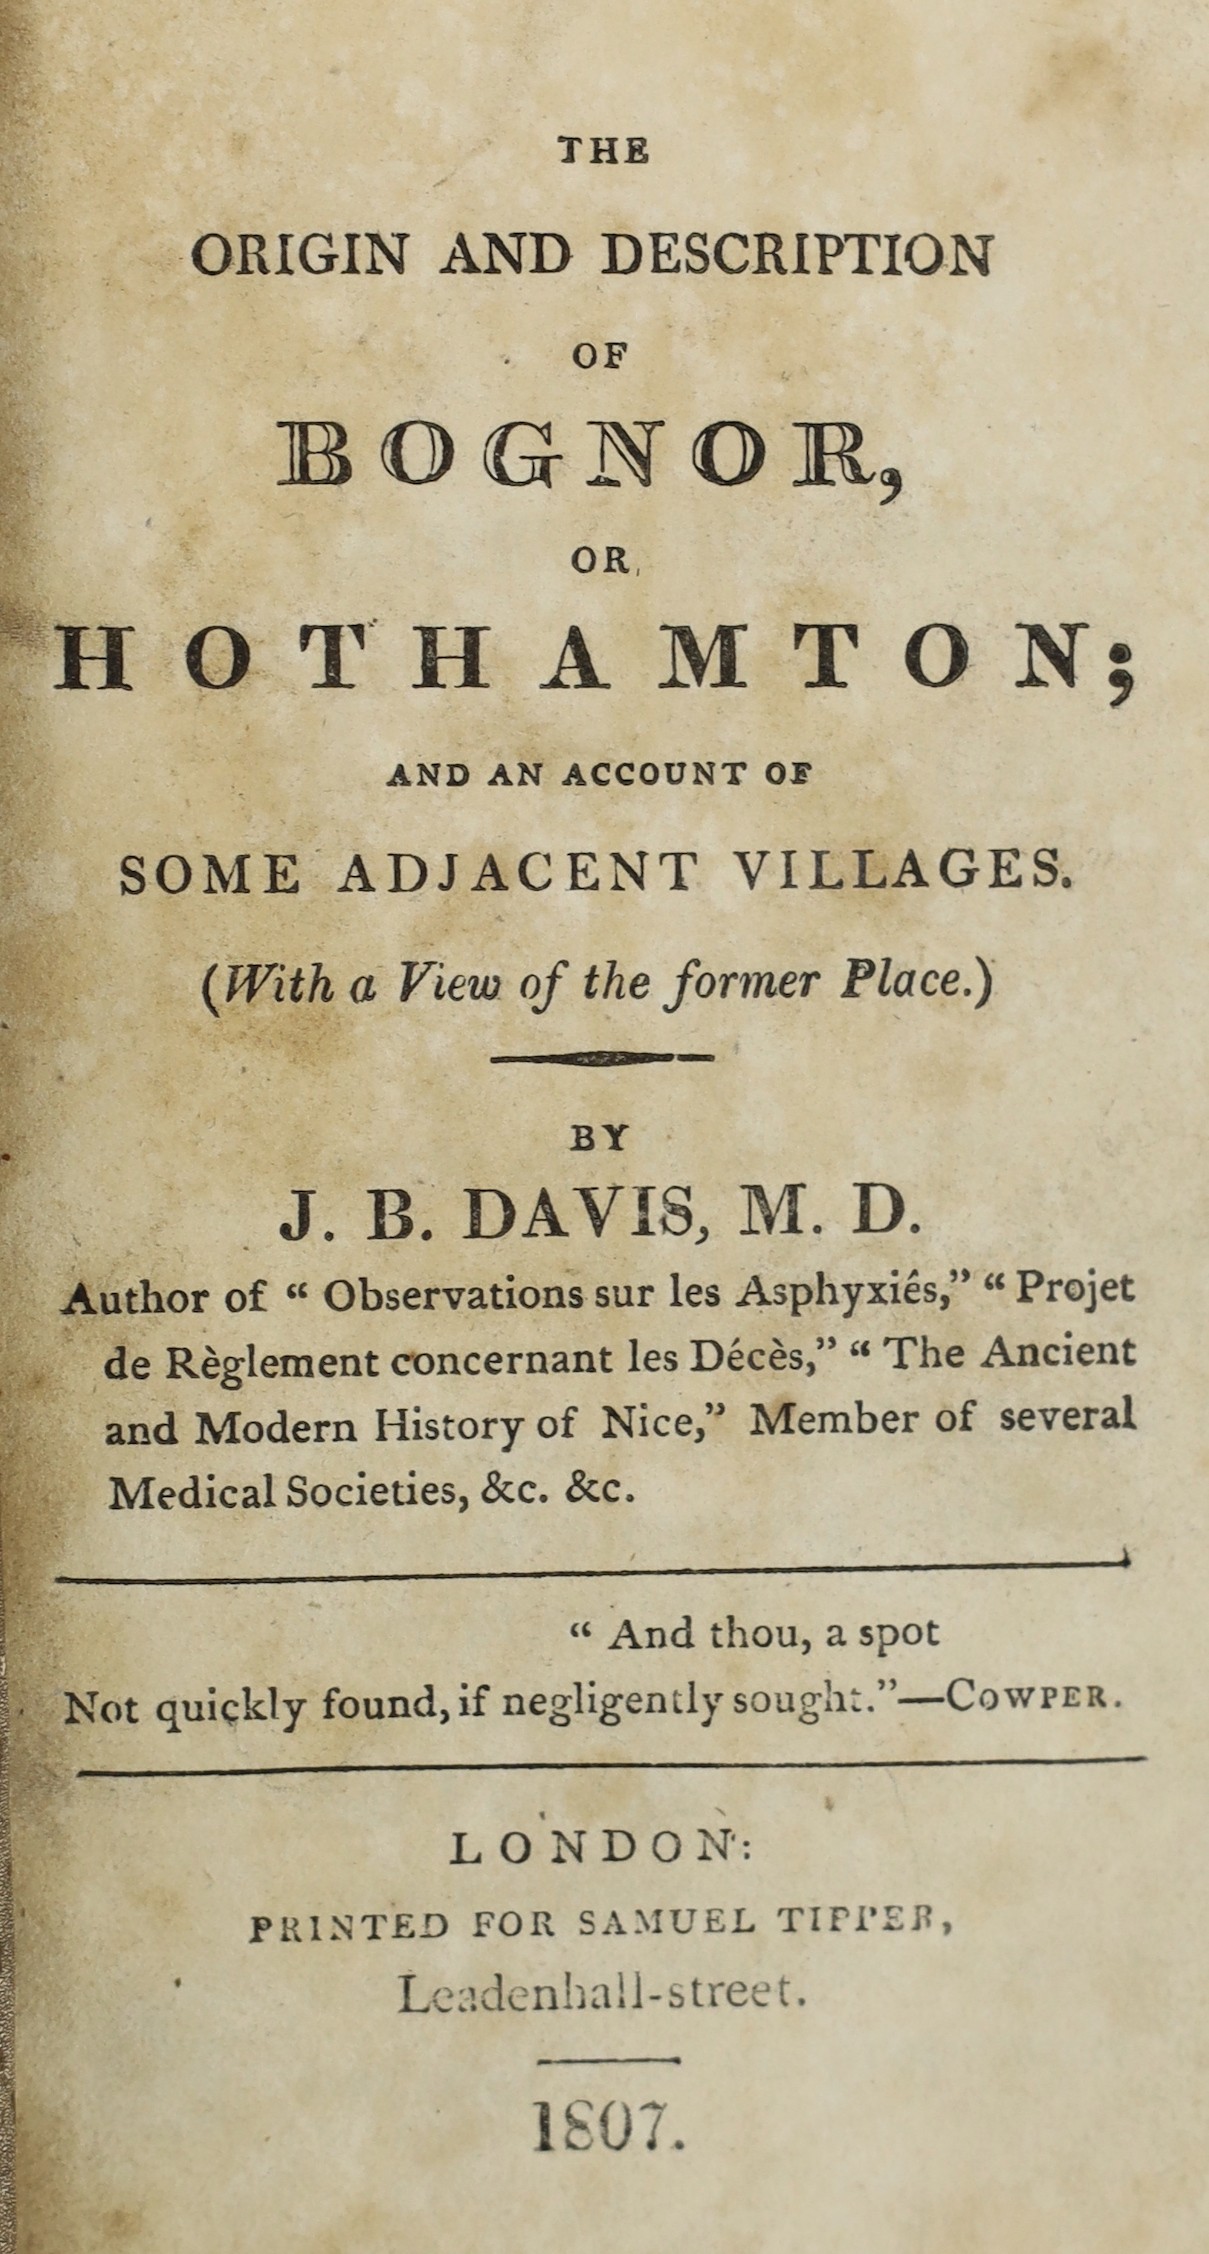 SUSSEX: Davies, J.B. - The Origin and Description of Bognor, or Hothampton; and an account of some adjacent villages ... aquatint frontis., half title; rebound cloth, uncut, sm.8vo. 1807